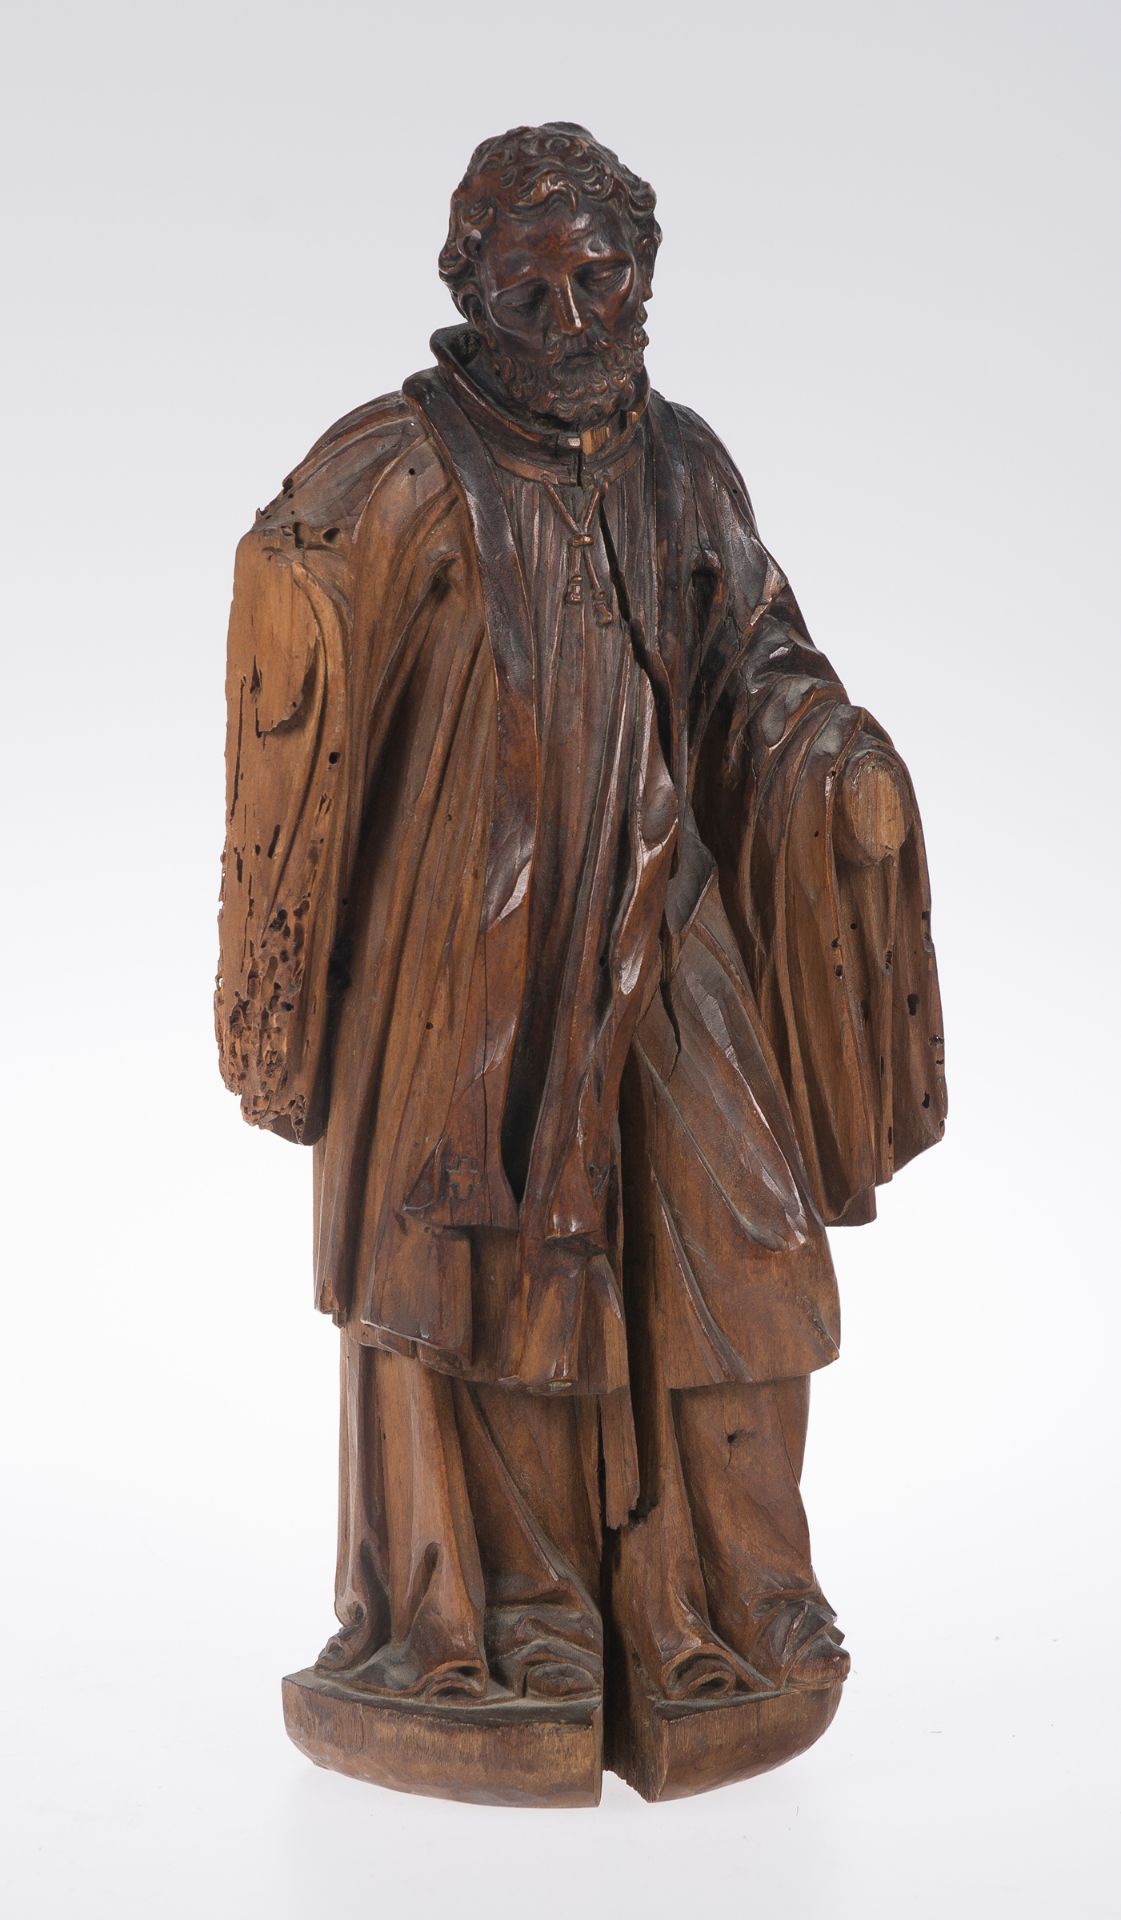 "Saint". Carved wooden sculpture. 17th century.